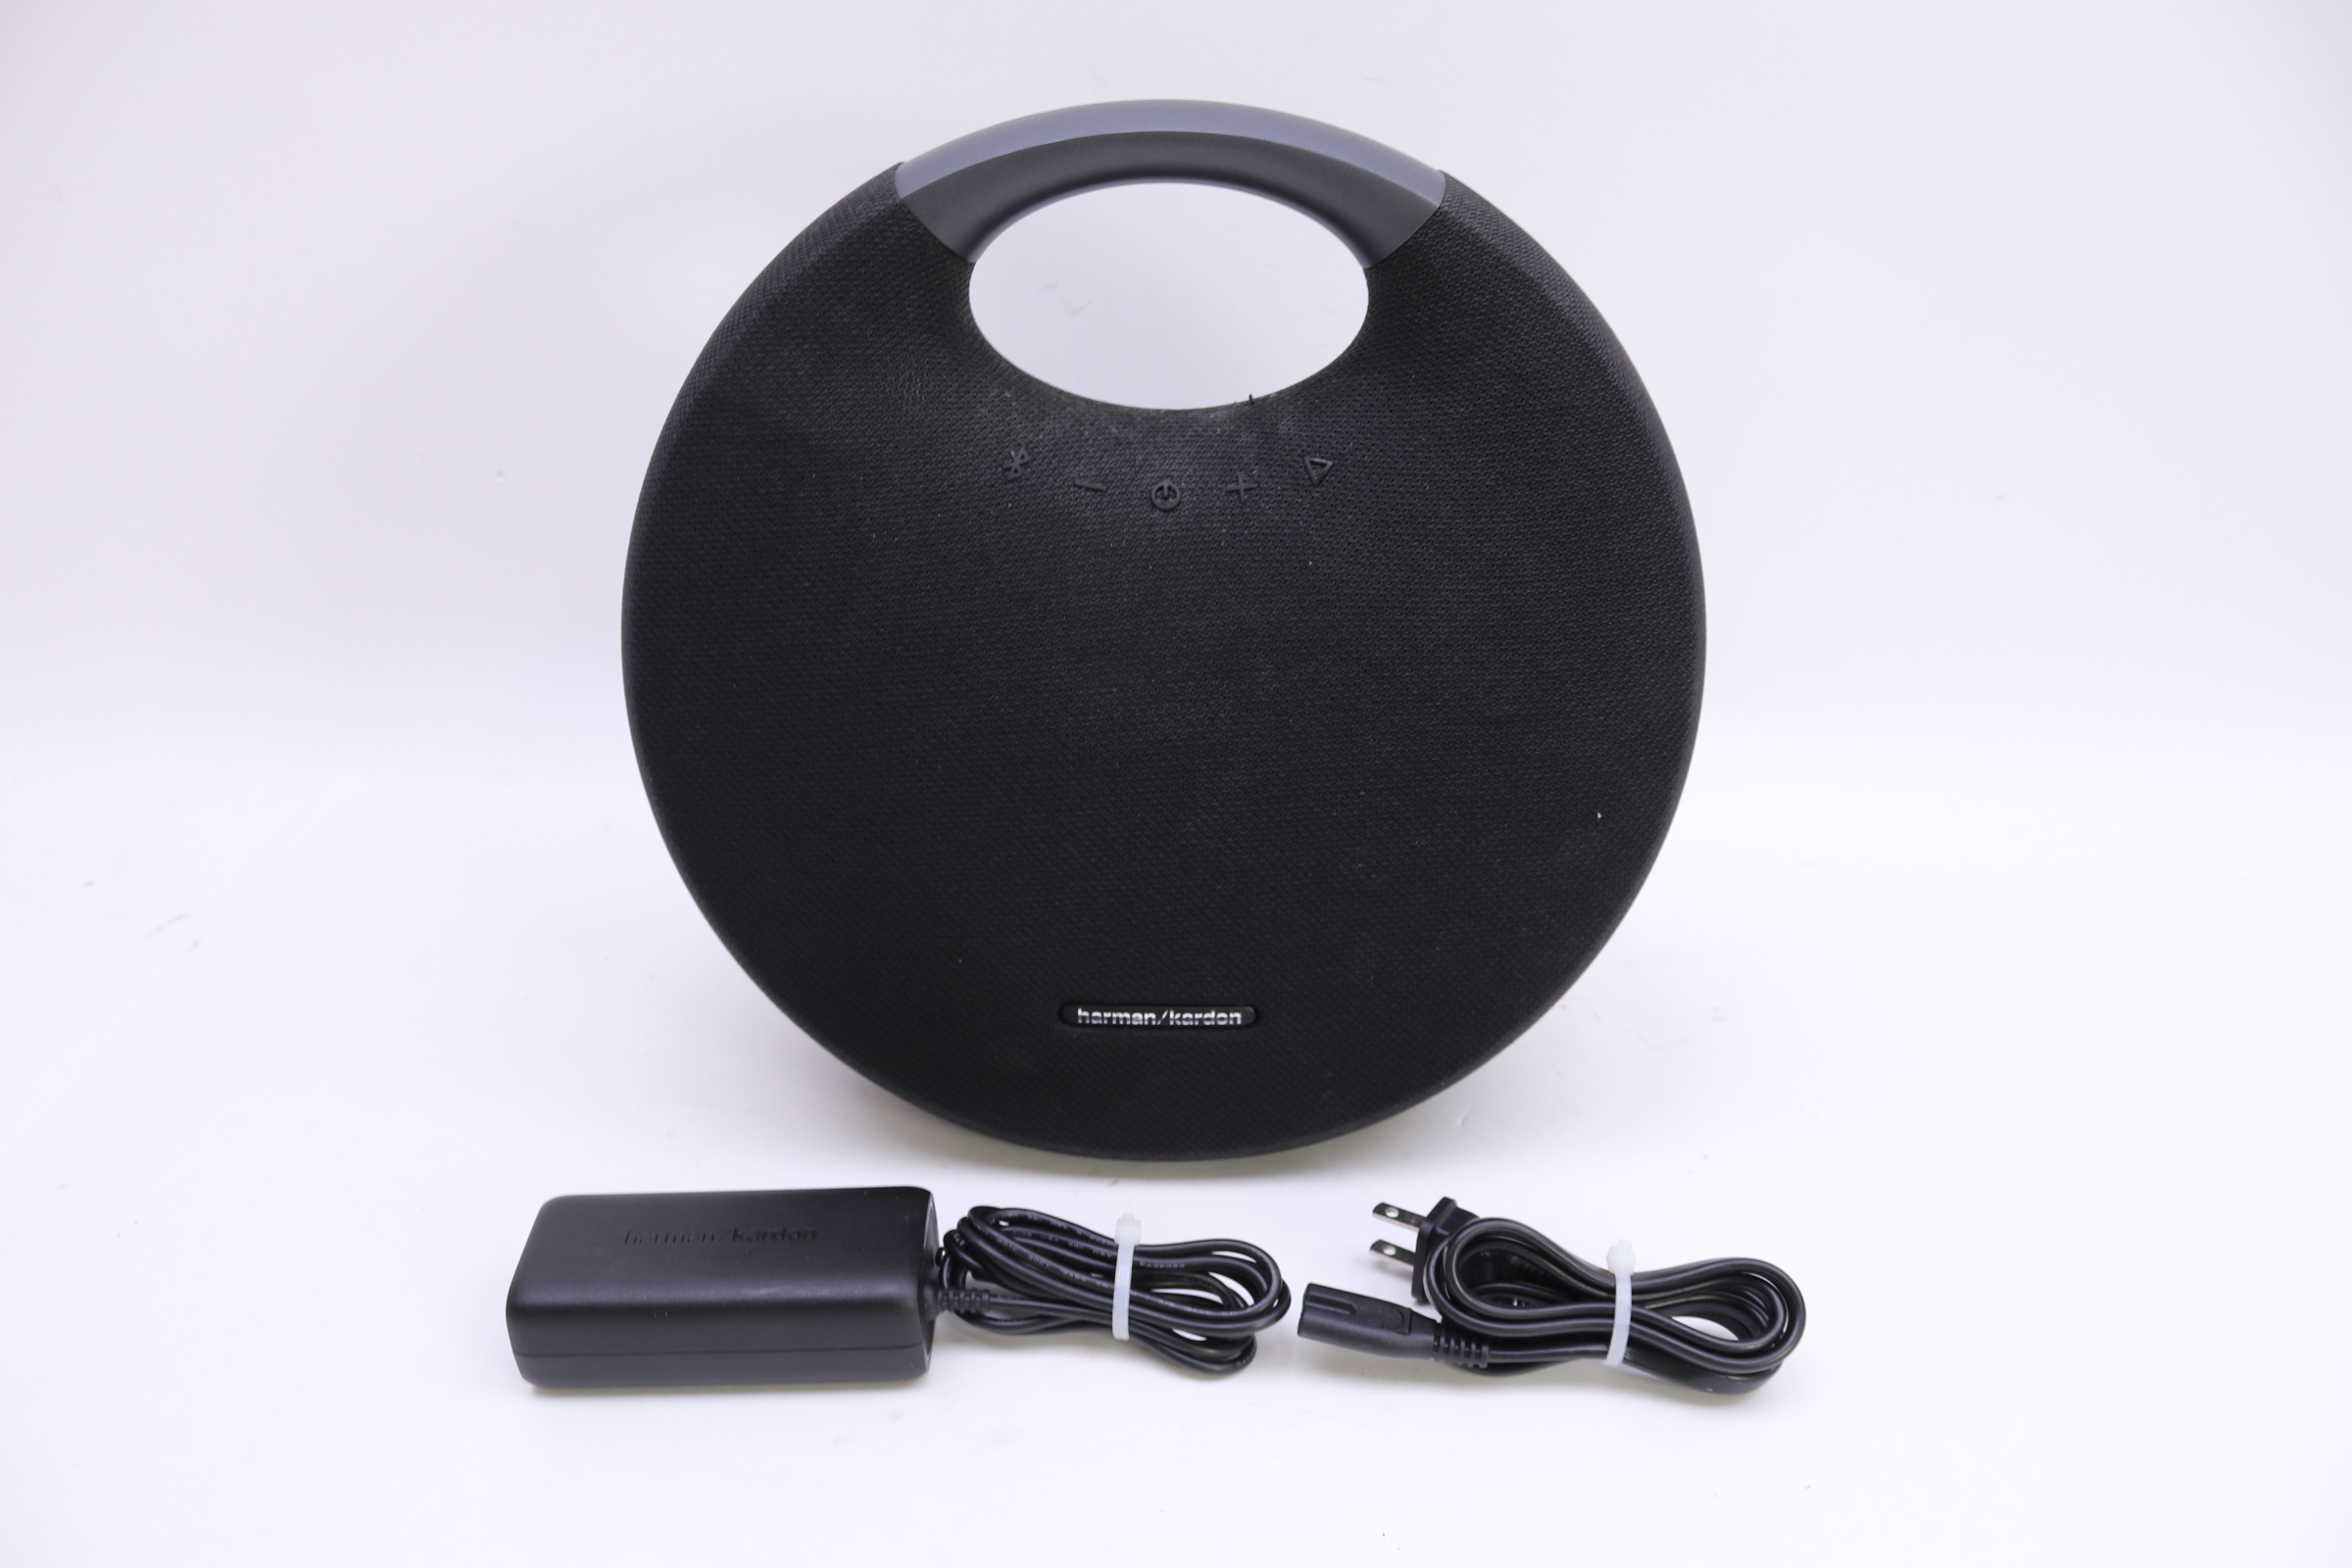 Harman/Kardon HKOS6BLKAM Onyx Studio 6 Portable Bluetooth Speaker